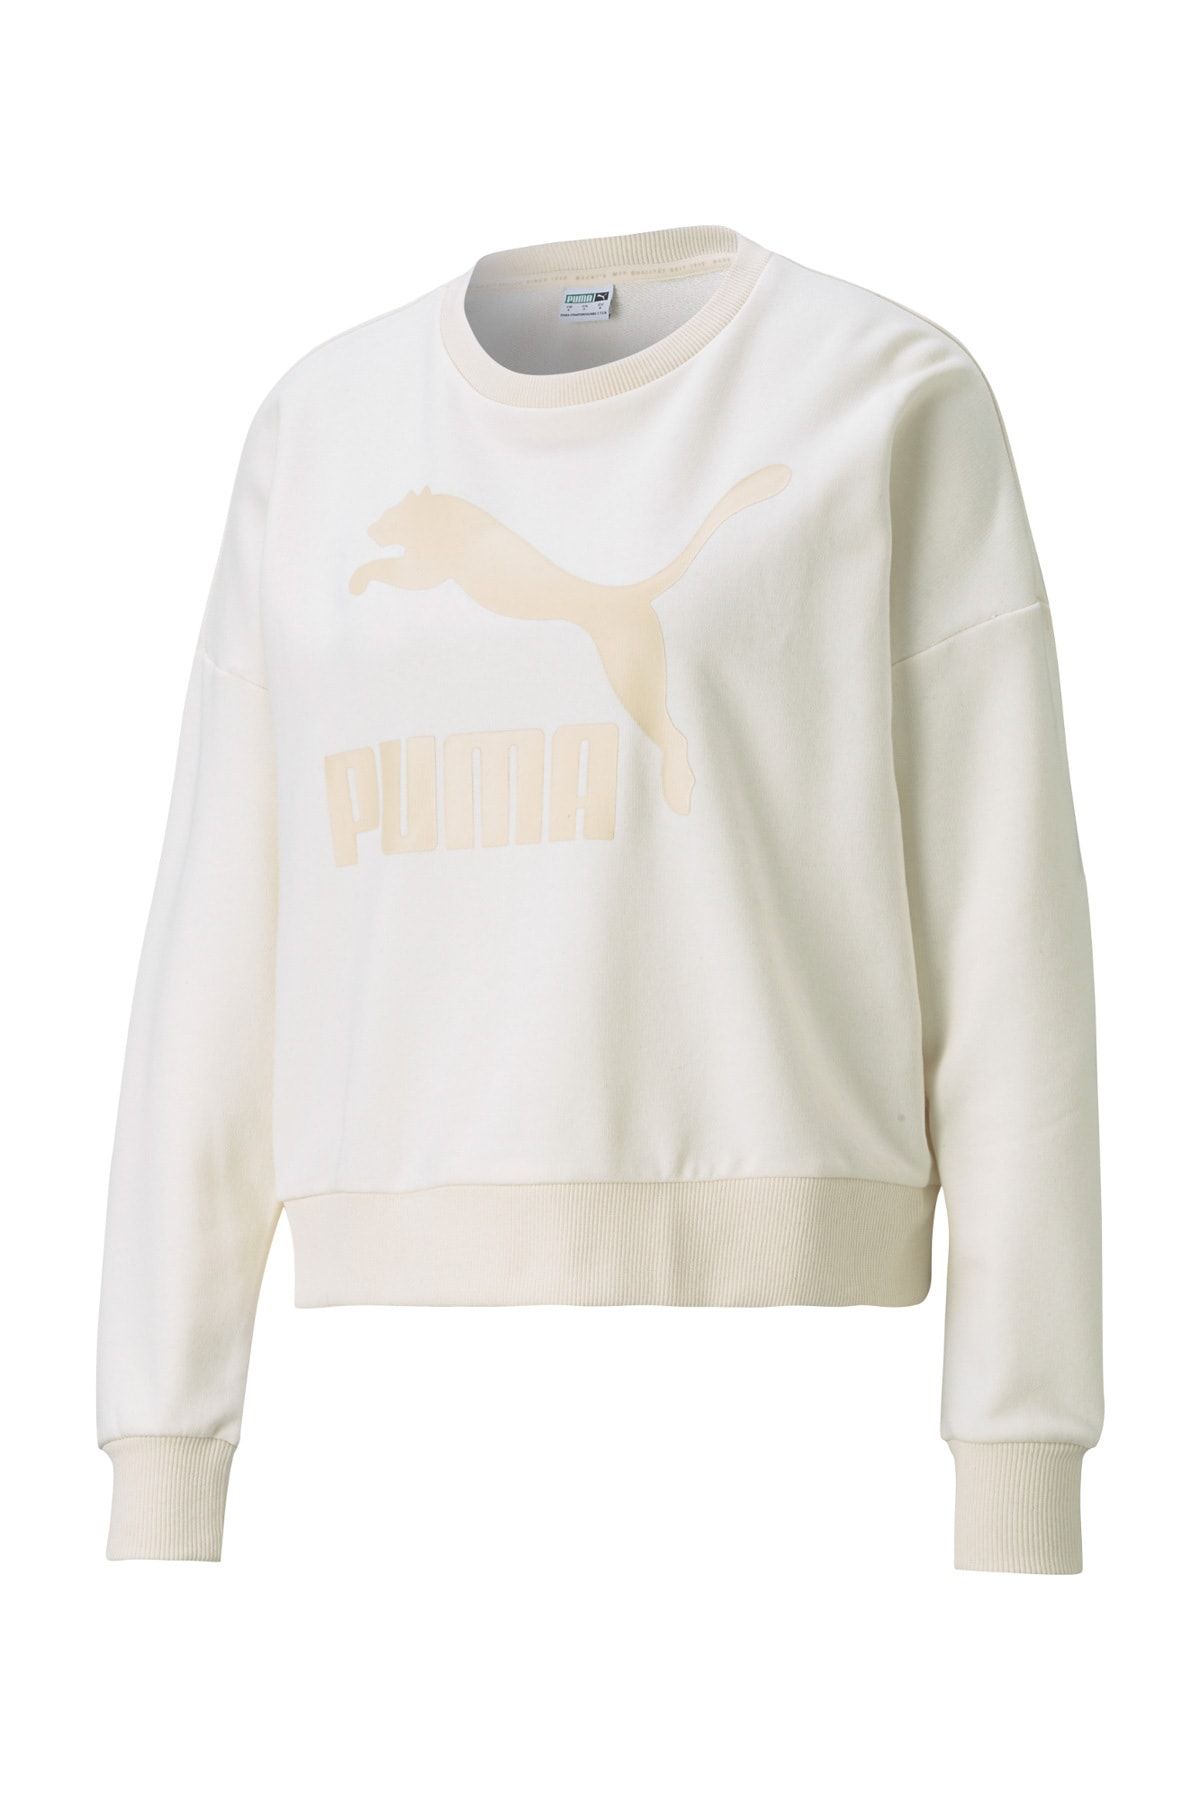 Puma Kadın Beyaz Classics Logo Crew Sweatshirt